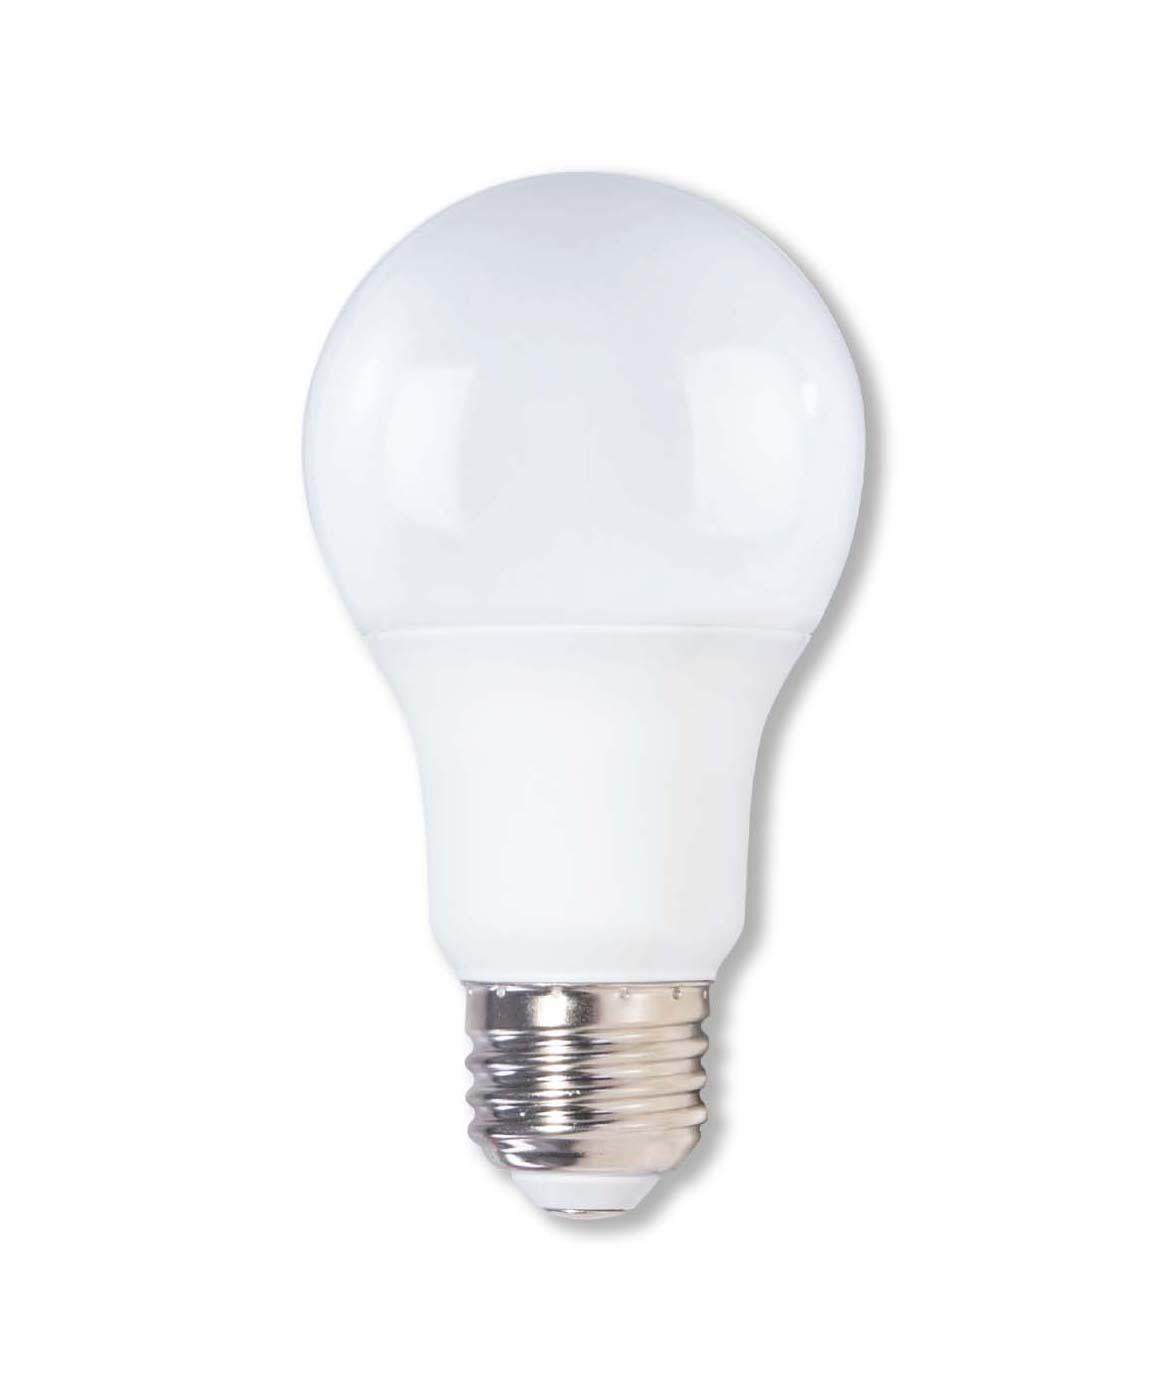 H-E-B A19 75-Watt LED Light Bulbs - Soft White; image 2 of 2